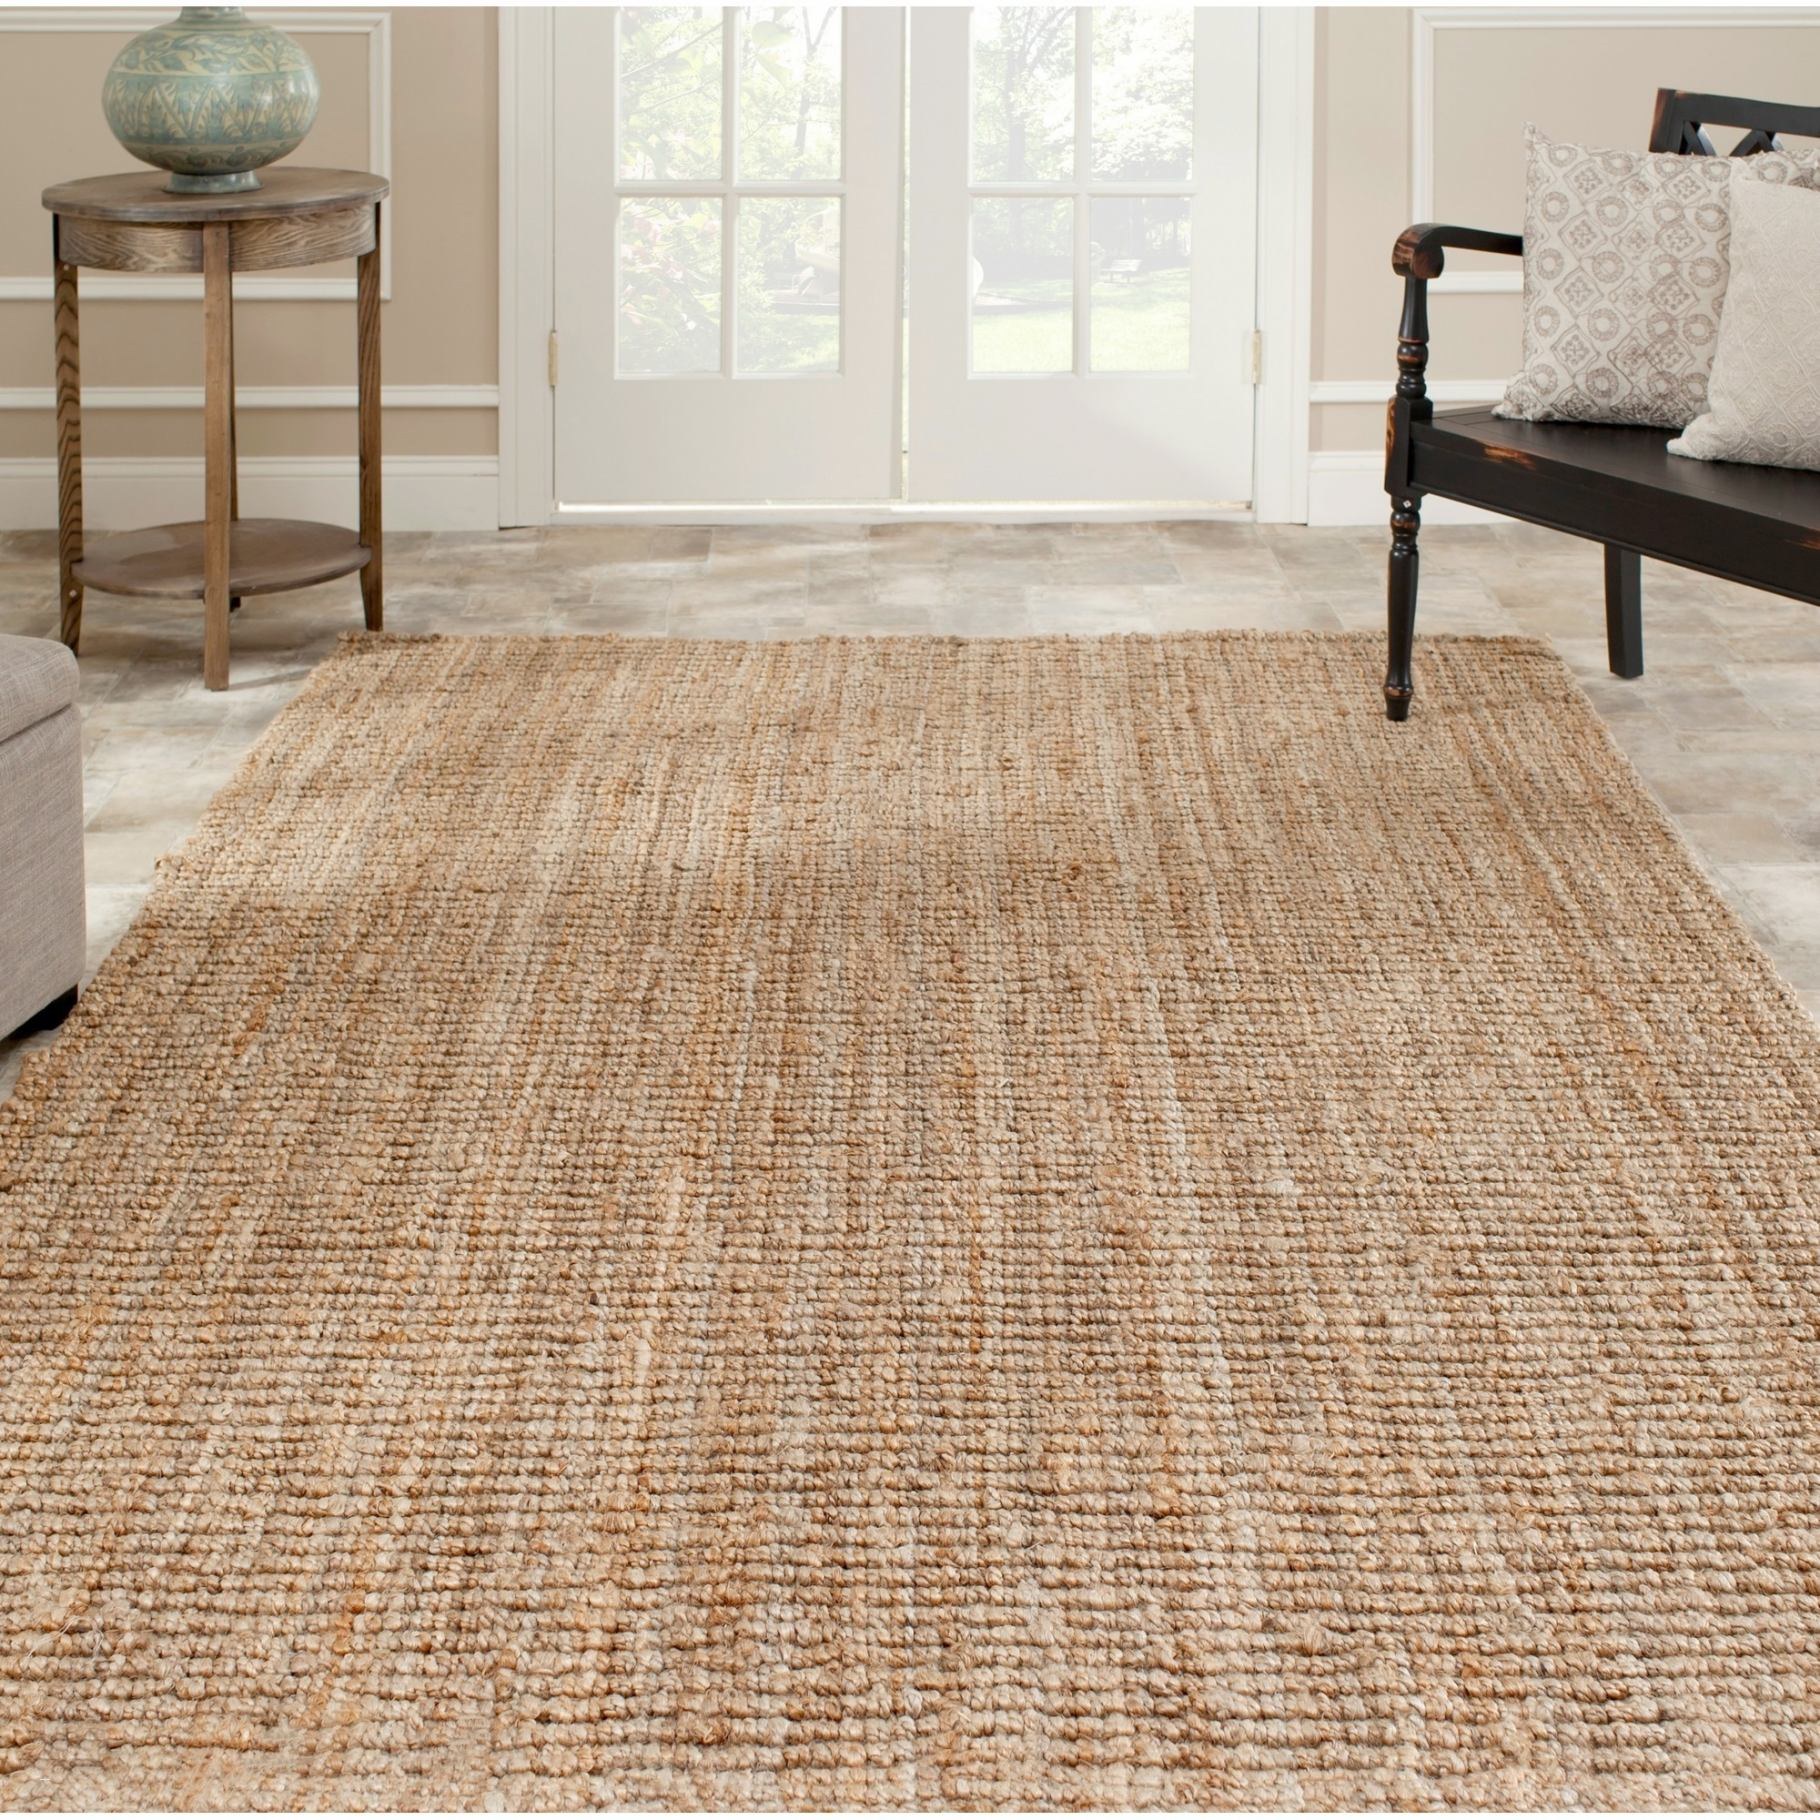 Large kitchen rugs extra large outdoor rugs beautiful flooring sisal rug ikea kitchen rugs  ikea MVVZDZH